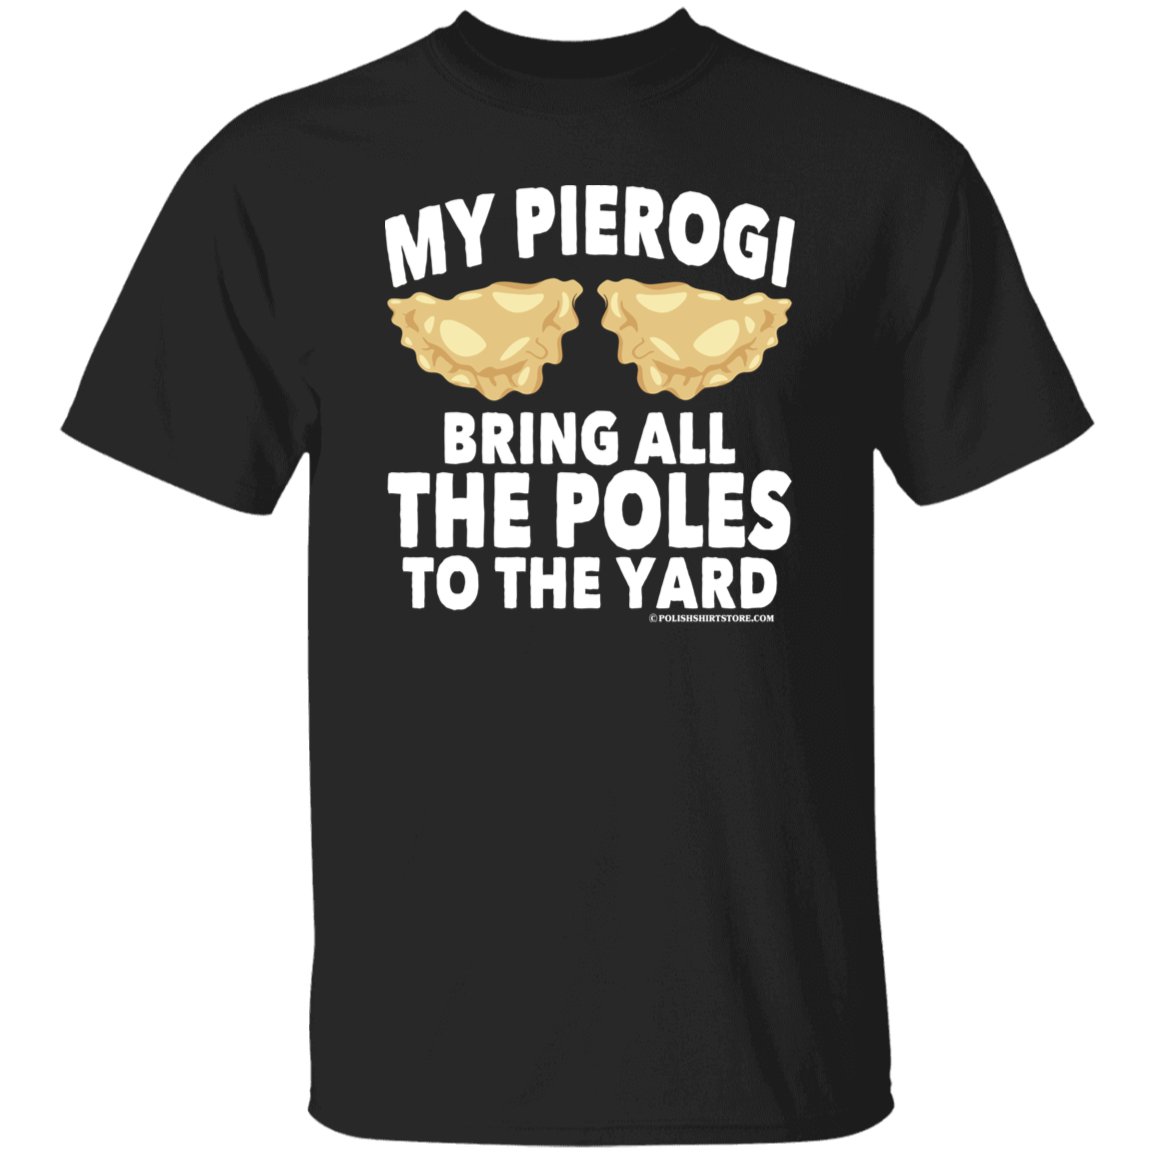 My Pierogi Bring All The Poles To The Yard Apparel CustomCat G500 5.3 oz. T-Shirt Black S